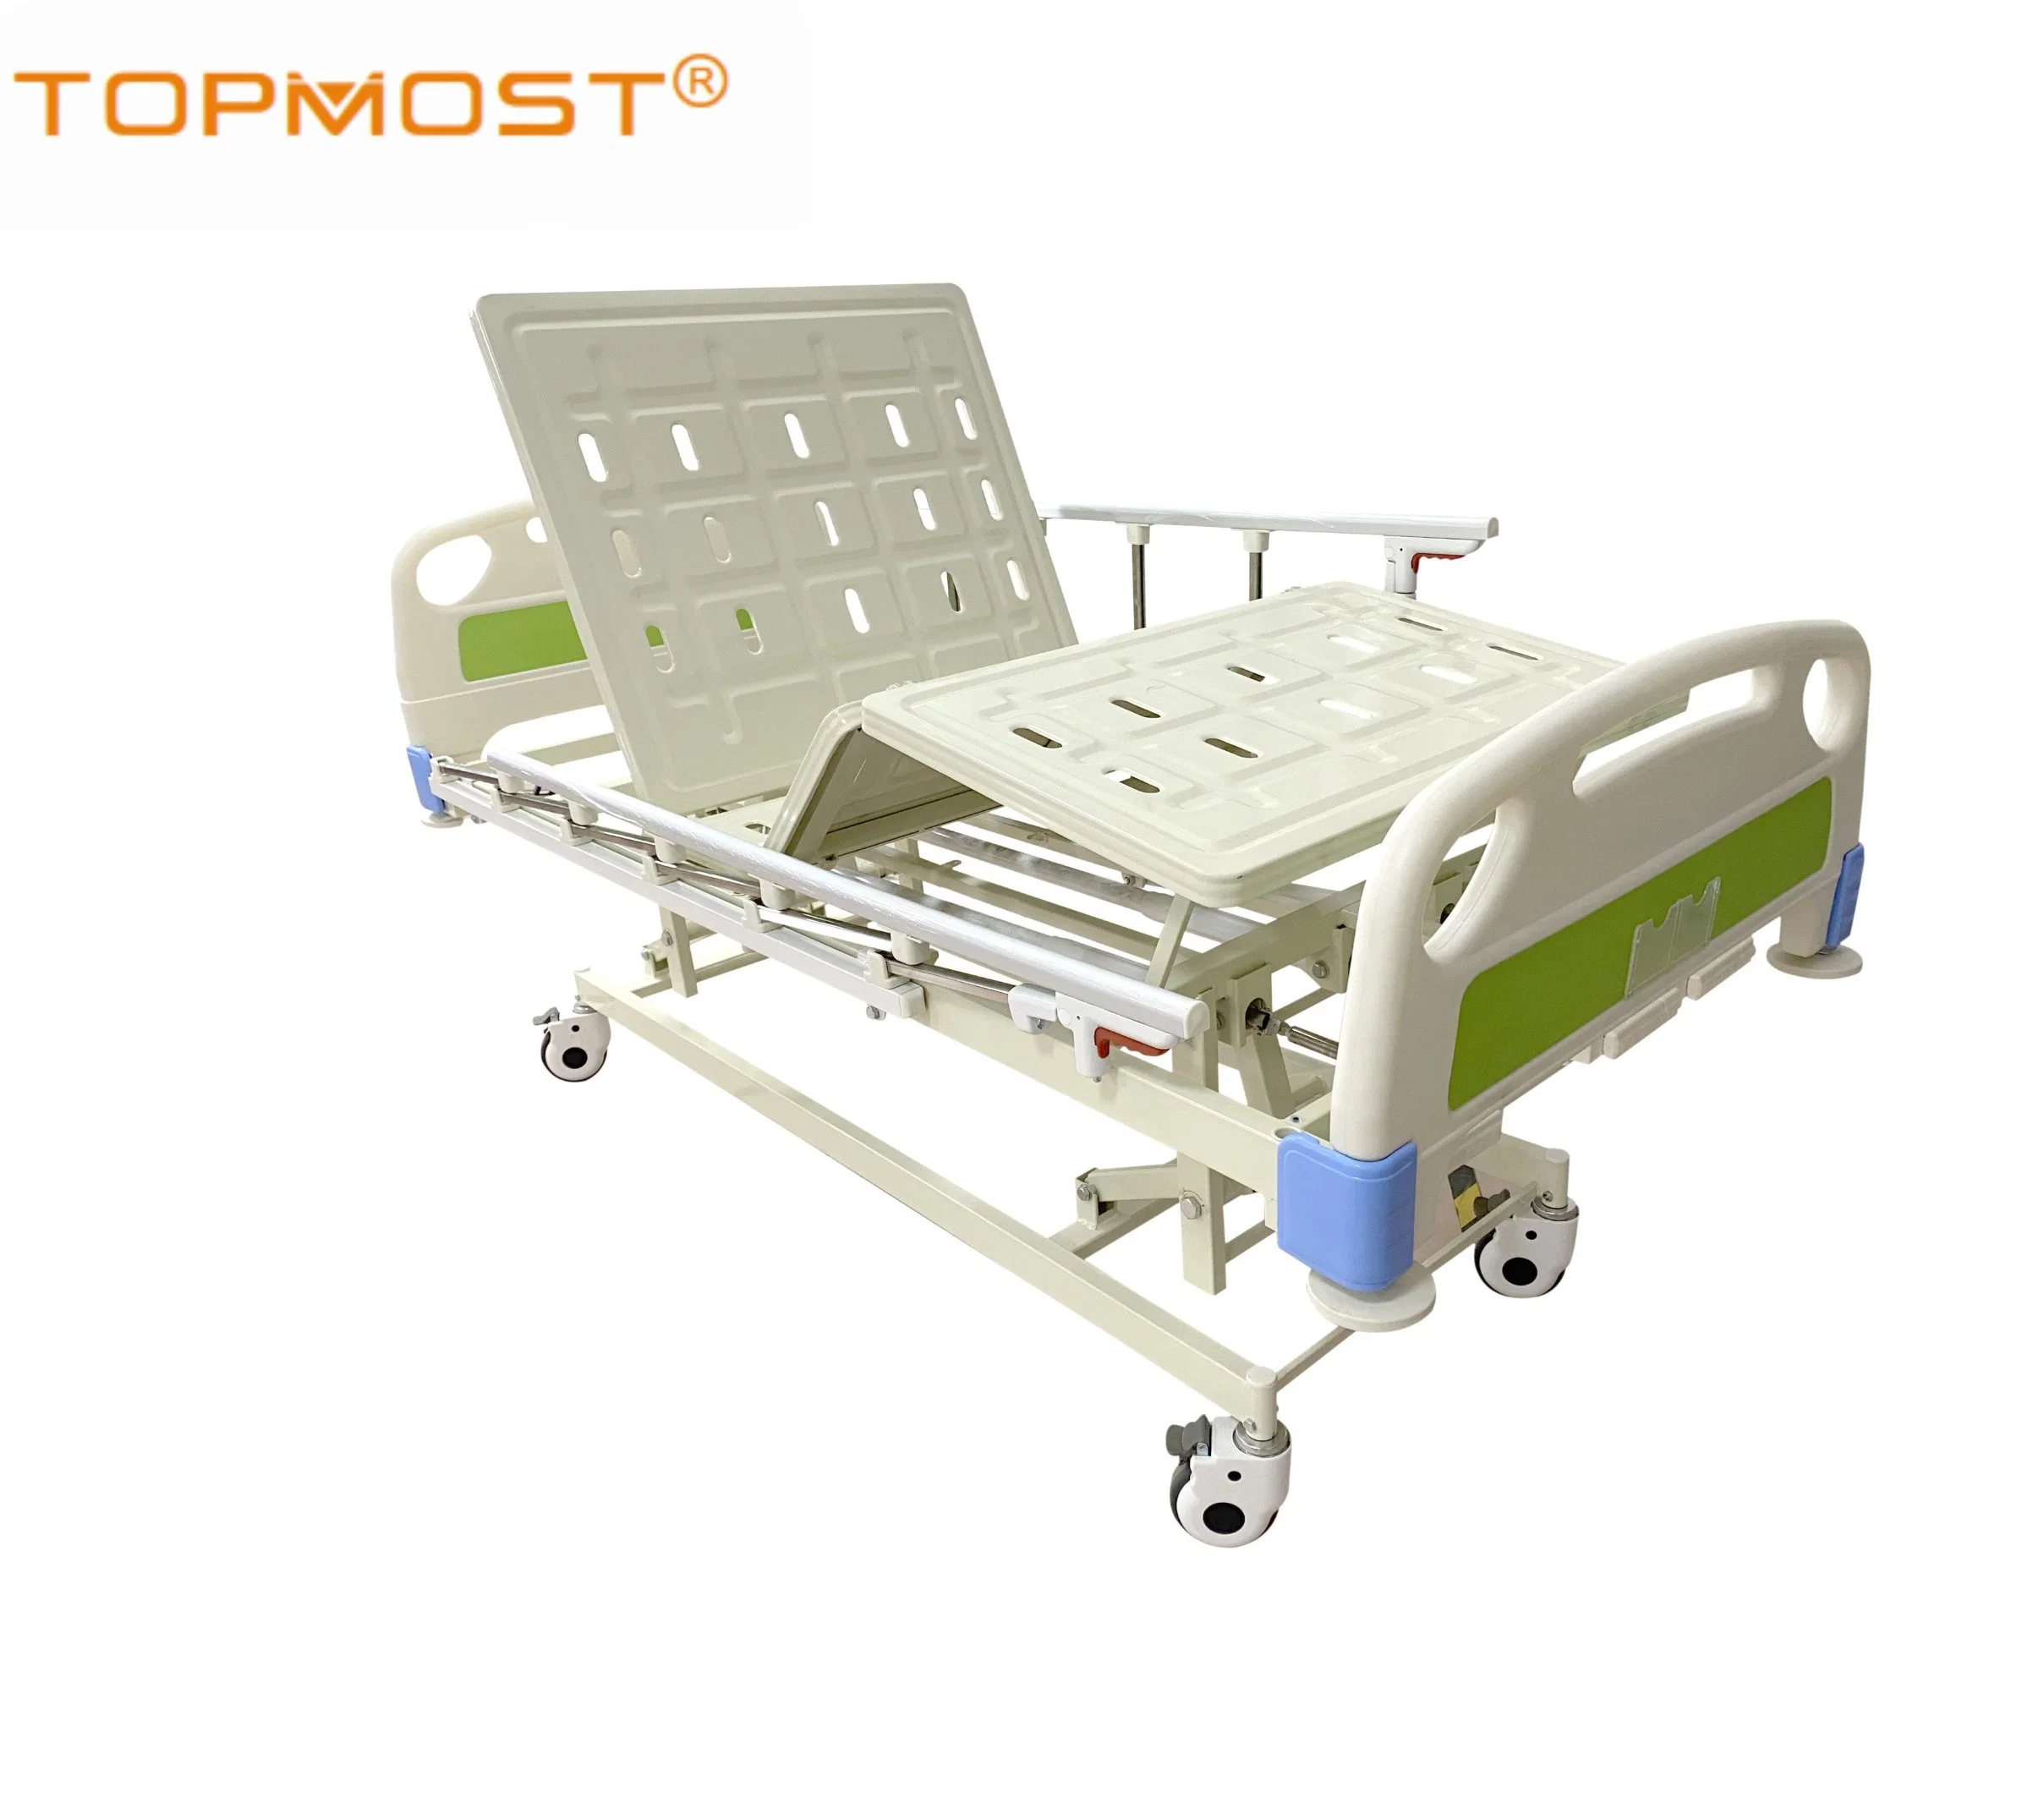 3 Crank Manual Hospital Bed Adjustable Height Manual Hospital Beds Manual Medical Bed for Sale